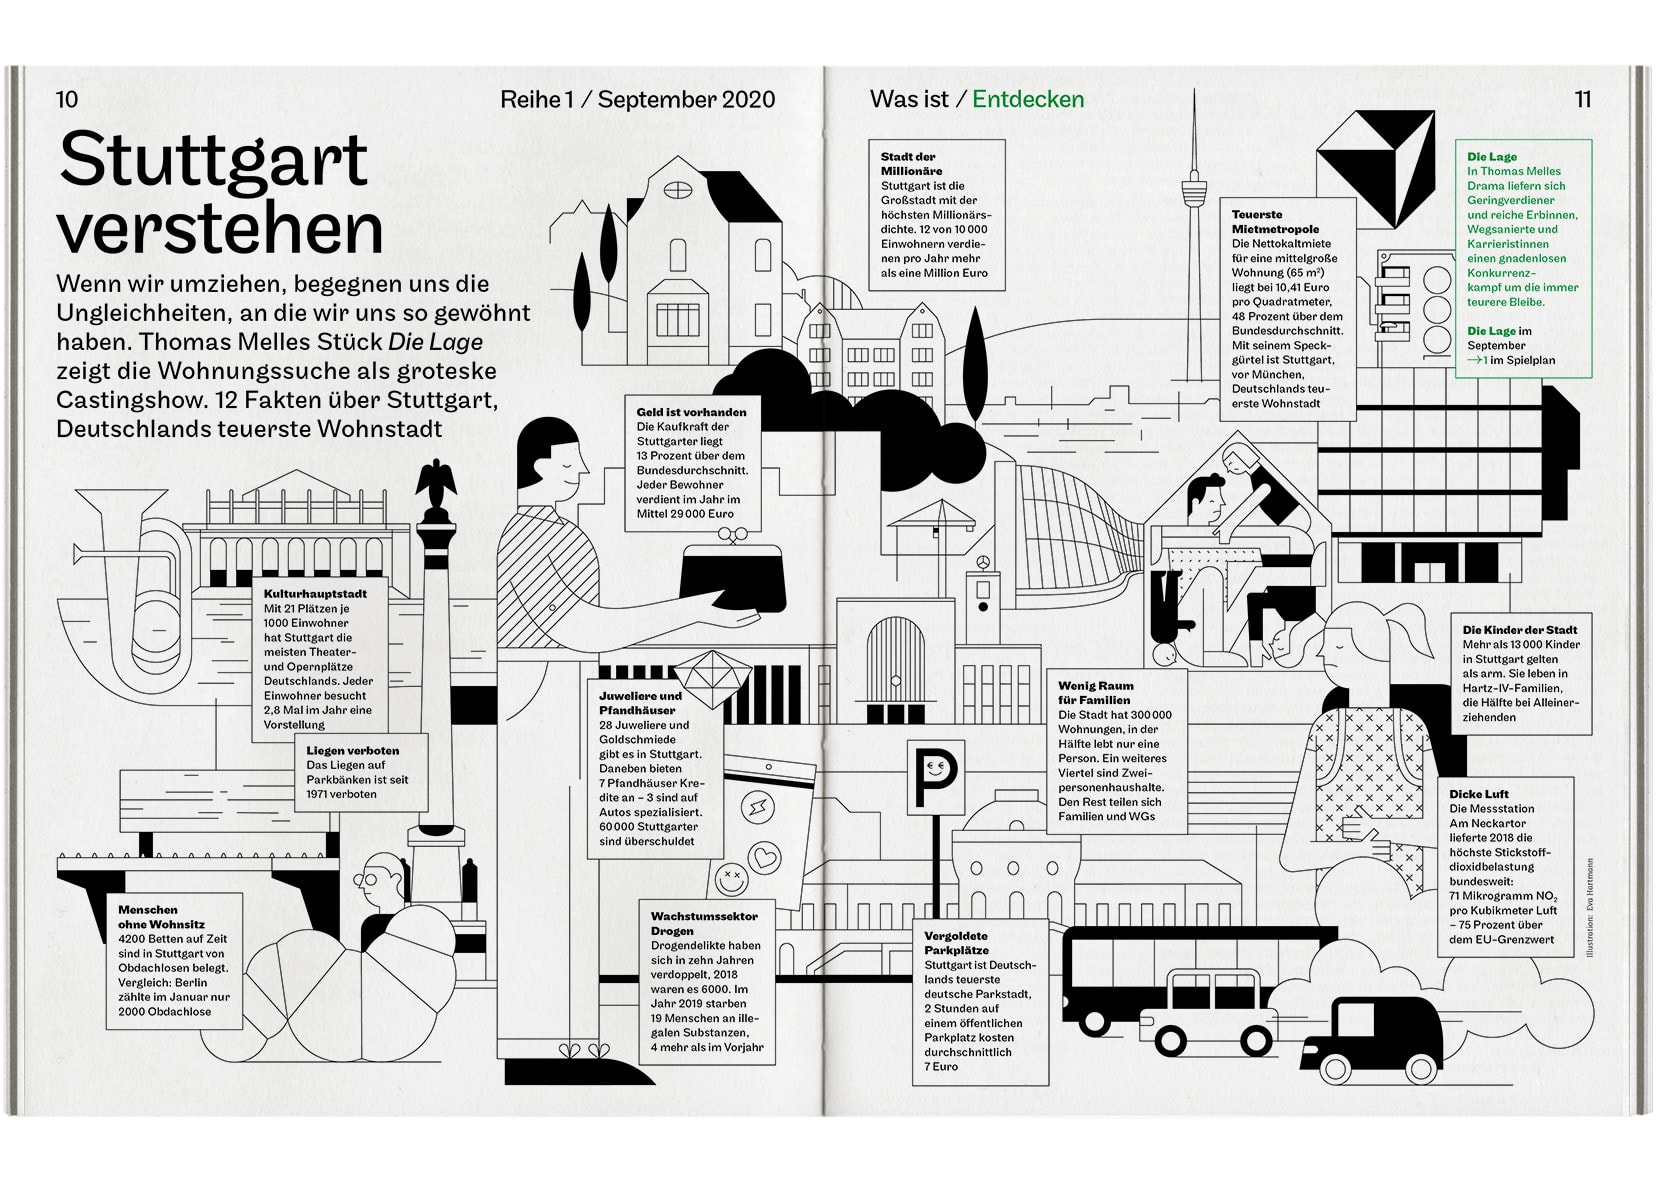 Bureau Johannes Erler – Reihe 1 — Magazin der Staatstheater Stuttgart